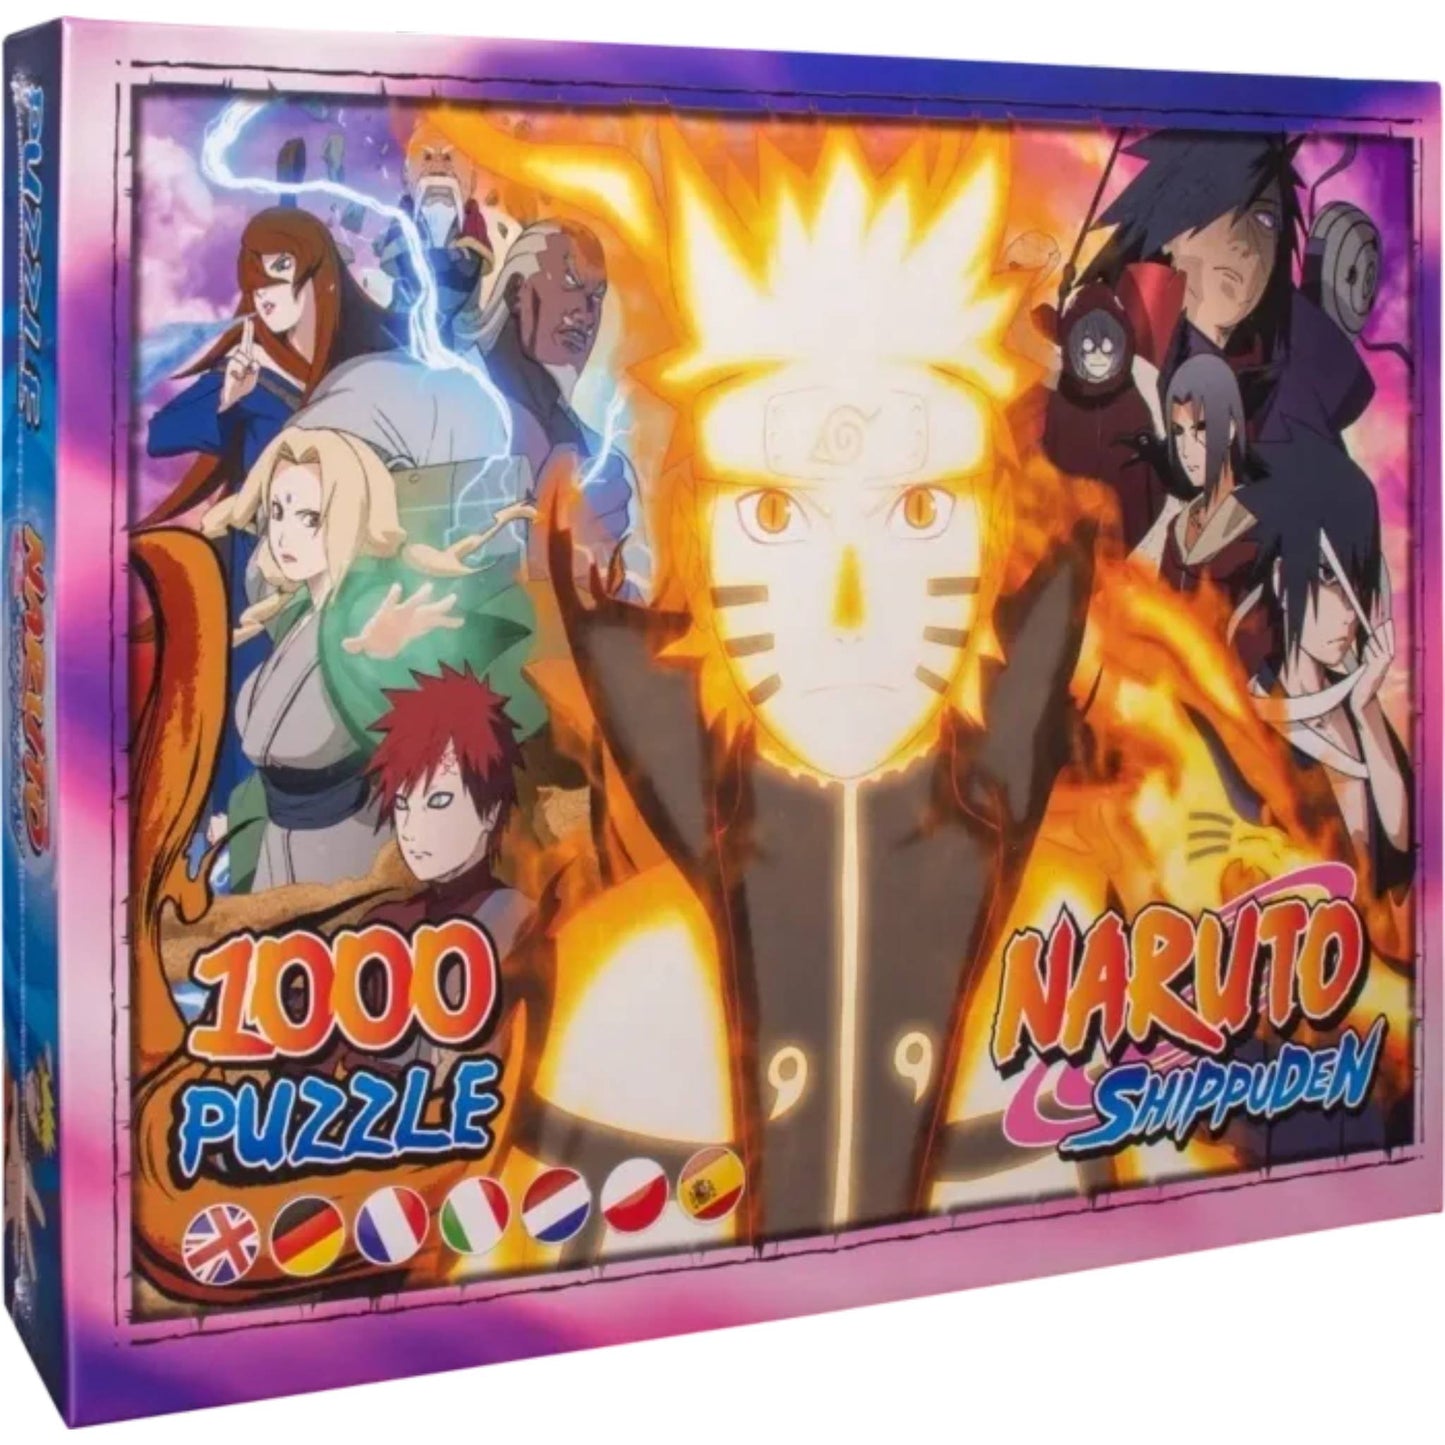 Naruto Shippuden - Naruto Jigsaw Puzzle (1000 Pieces)